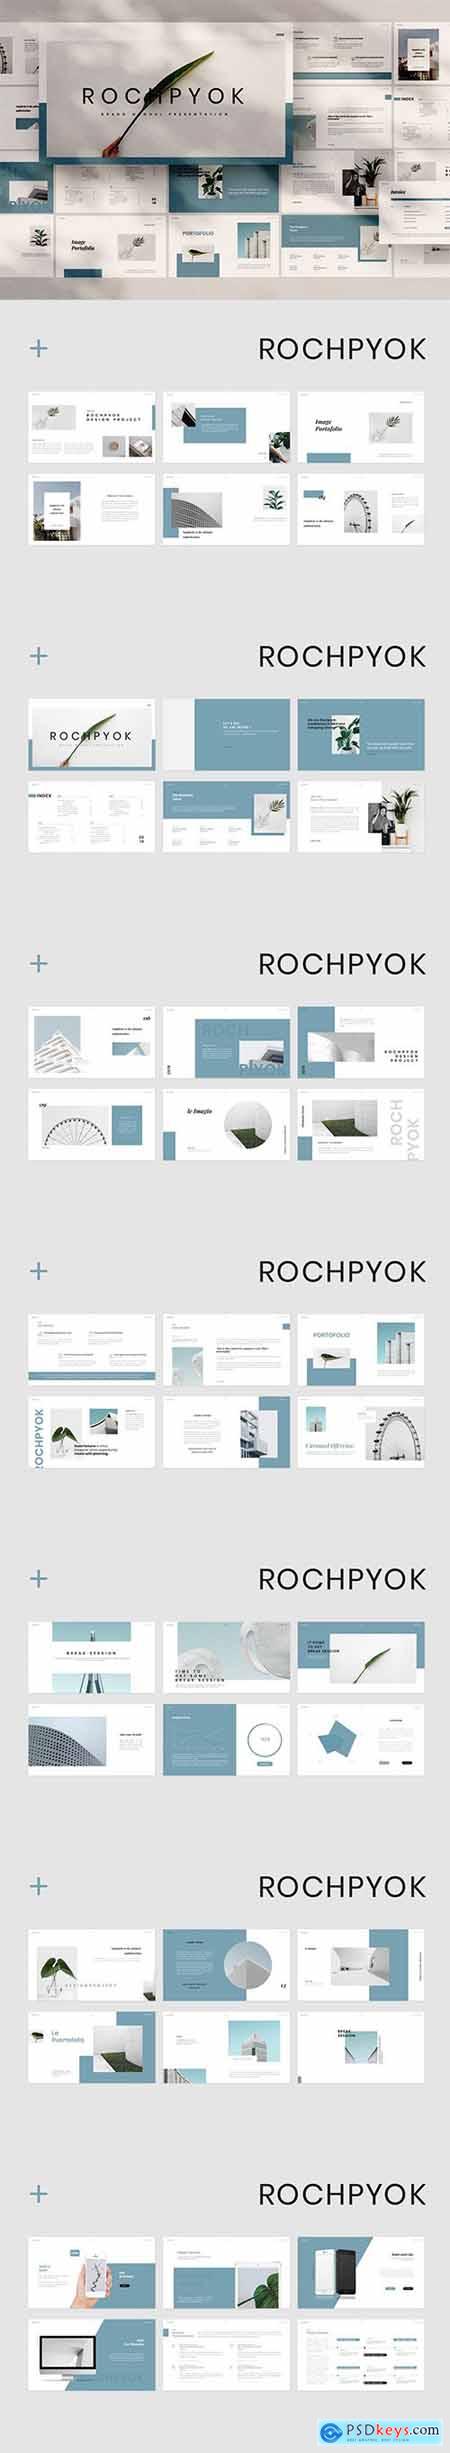 Rochpyok Powerpoint, Keynote and Google Slides Templates